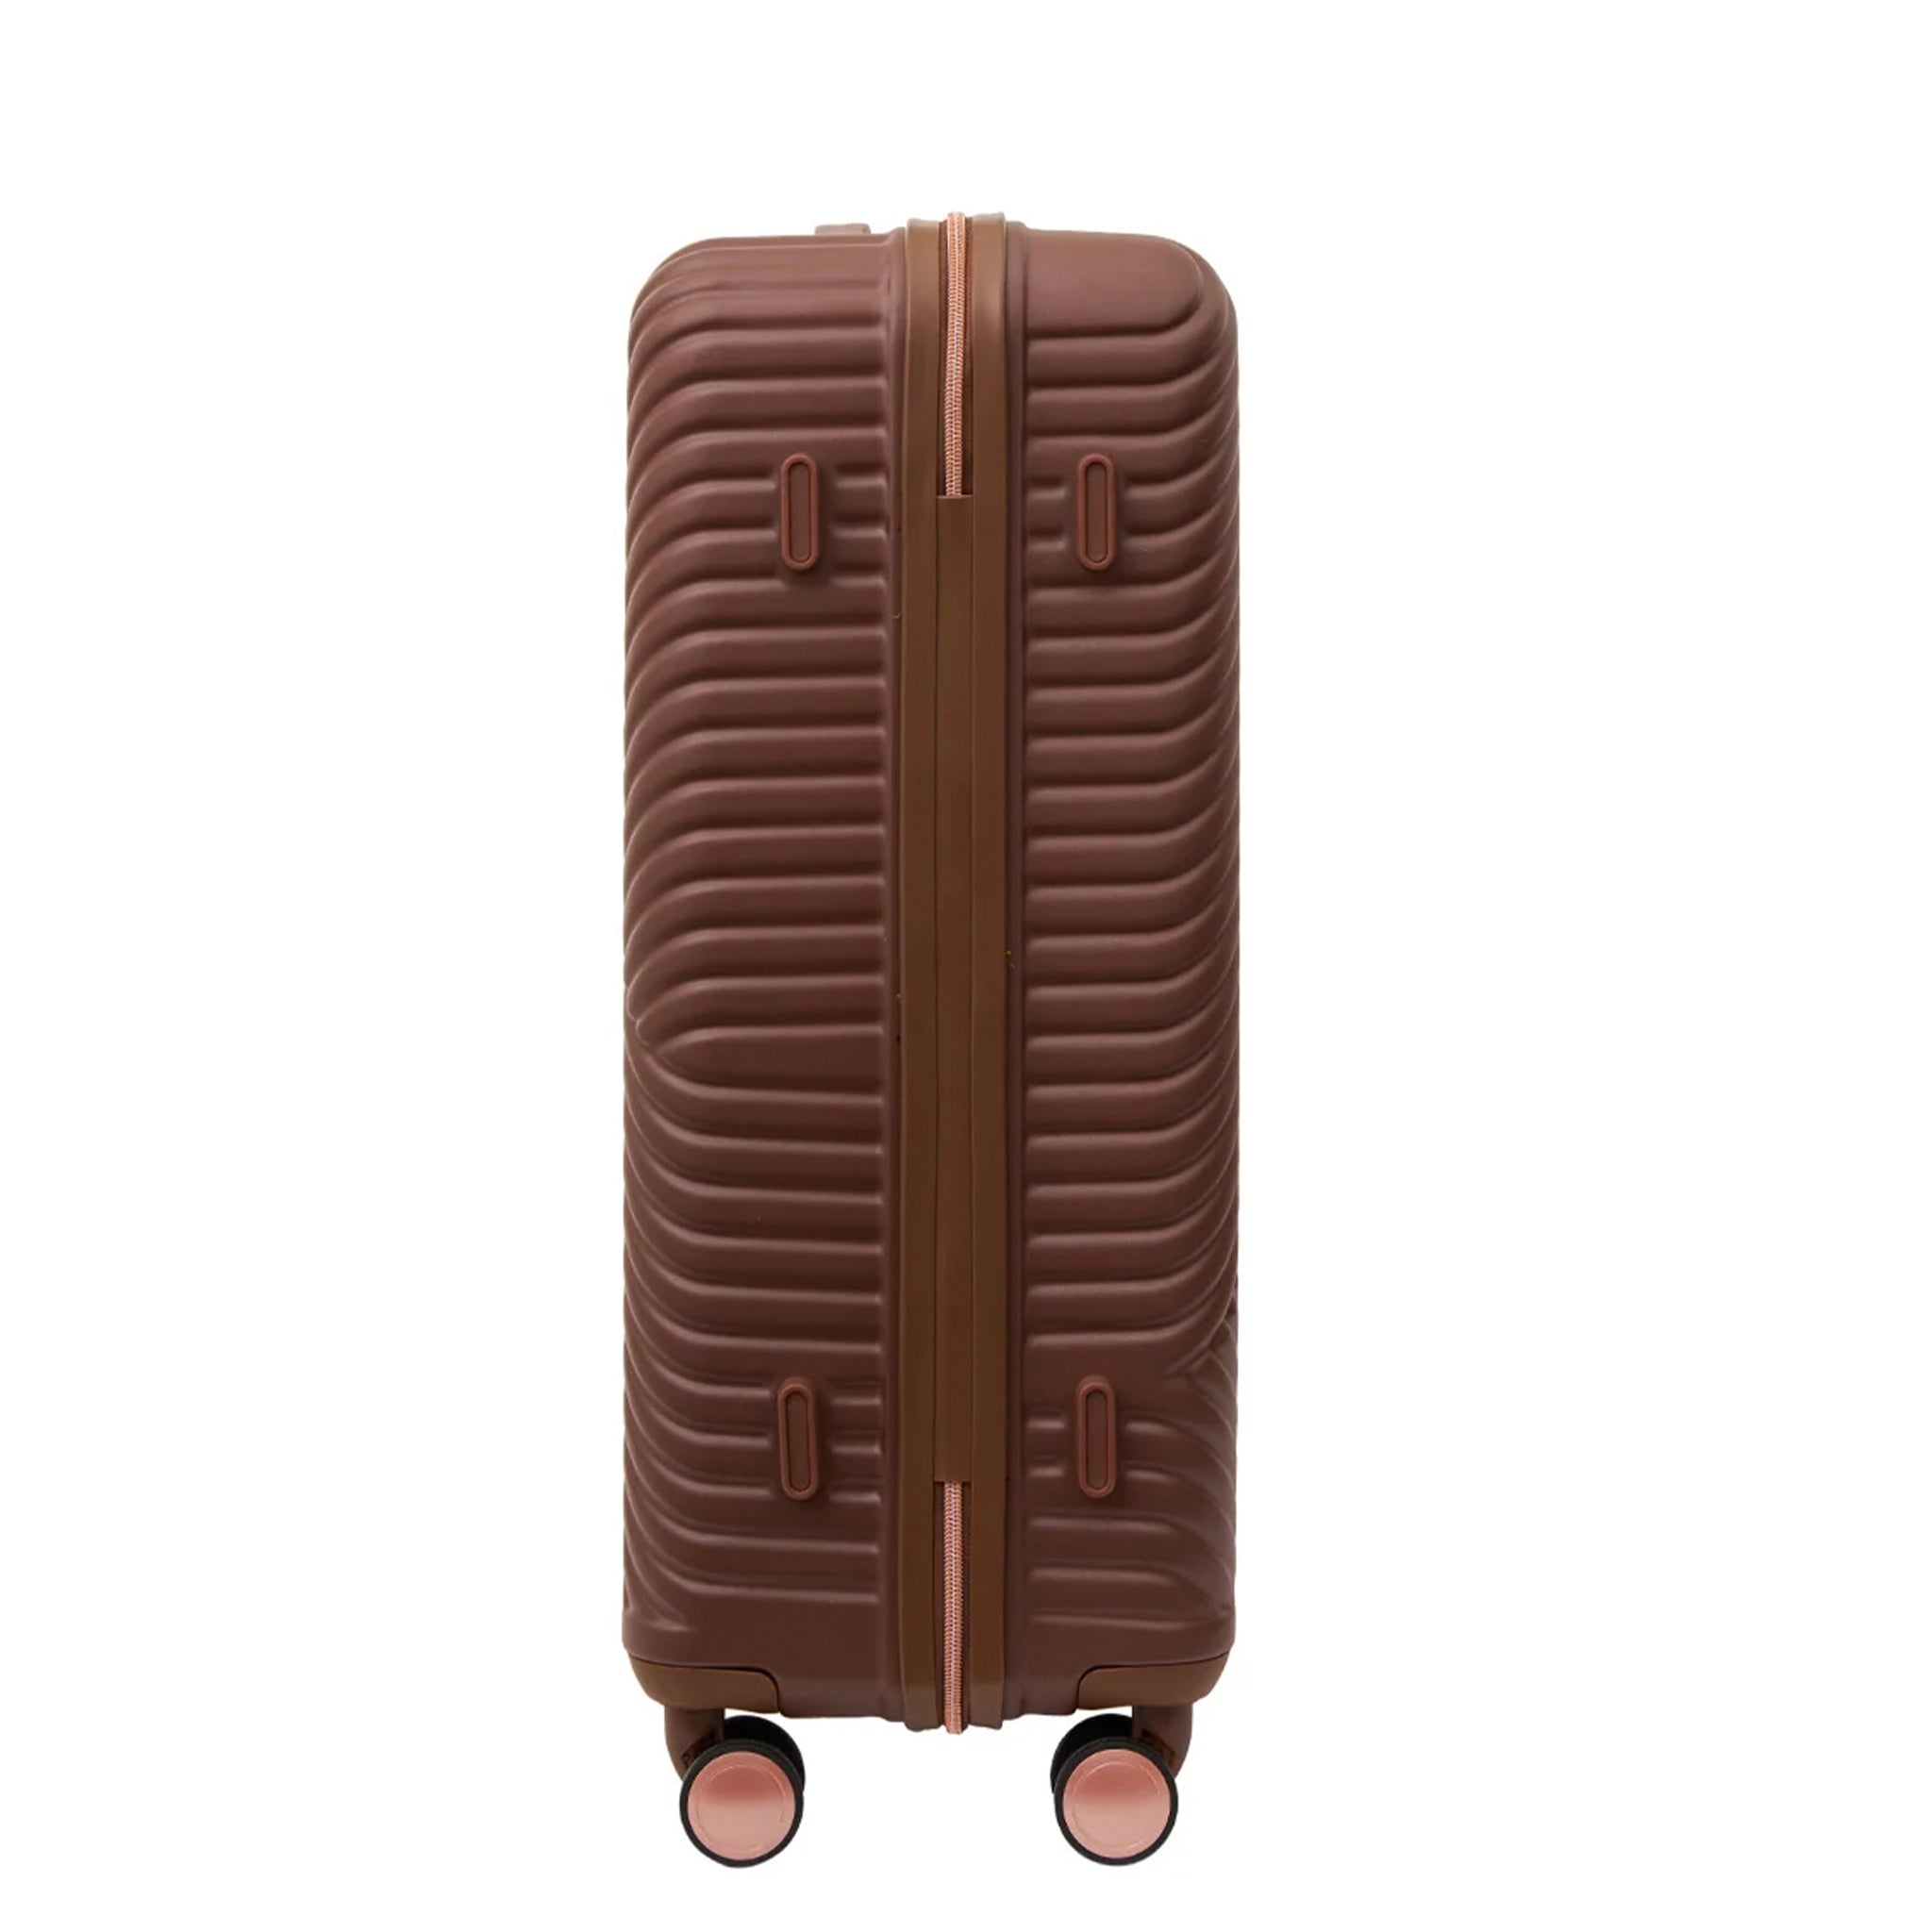 Saben Suitcase Set of Cabin, Medium, Large - Nutshell